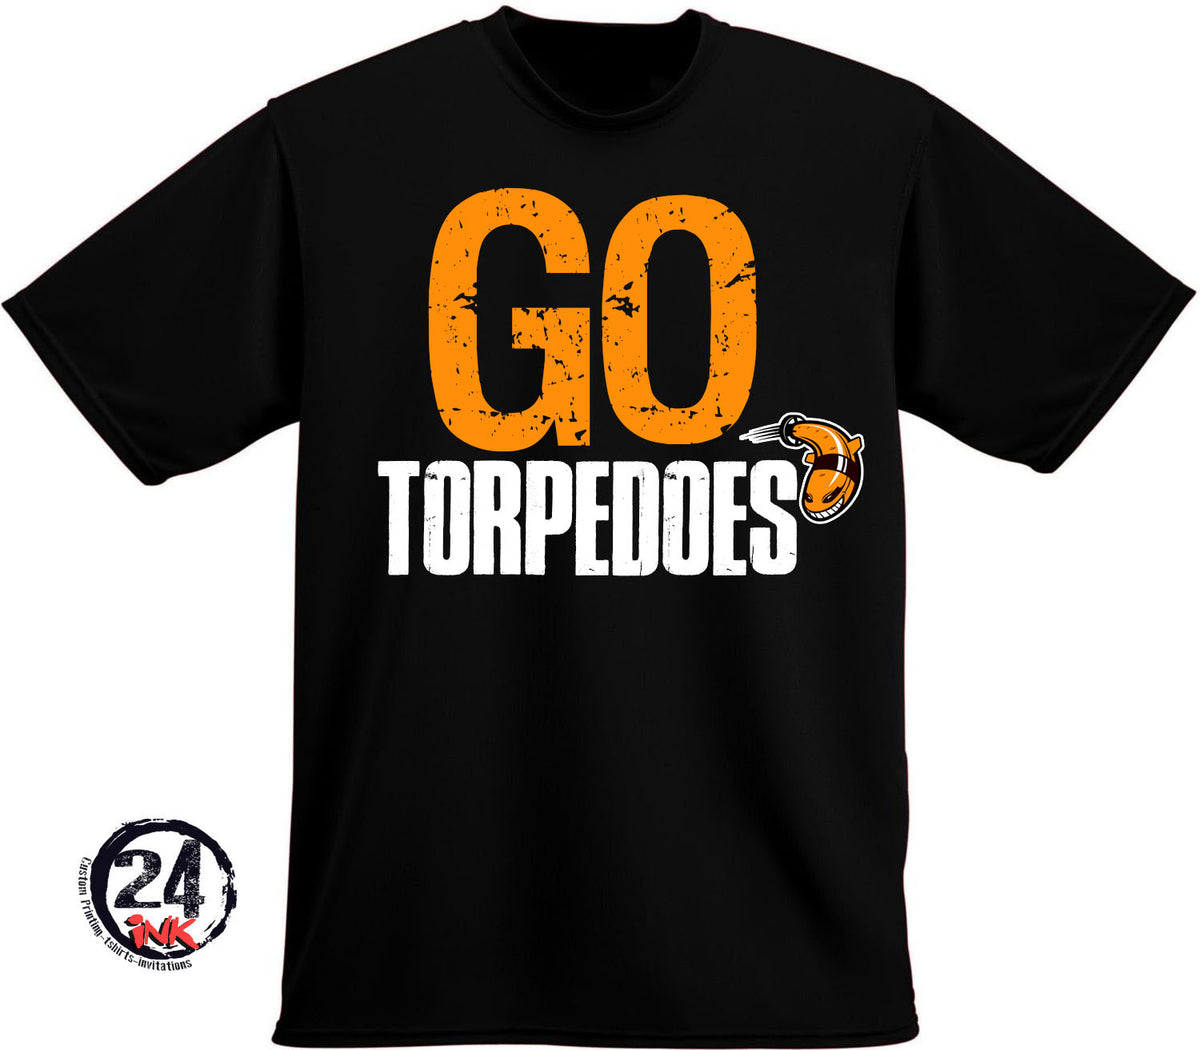 Go Torpedoes, Swim team